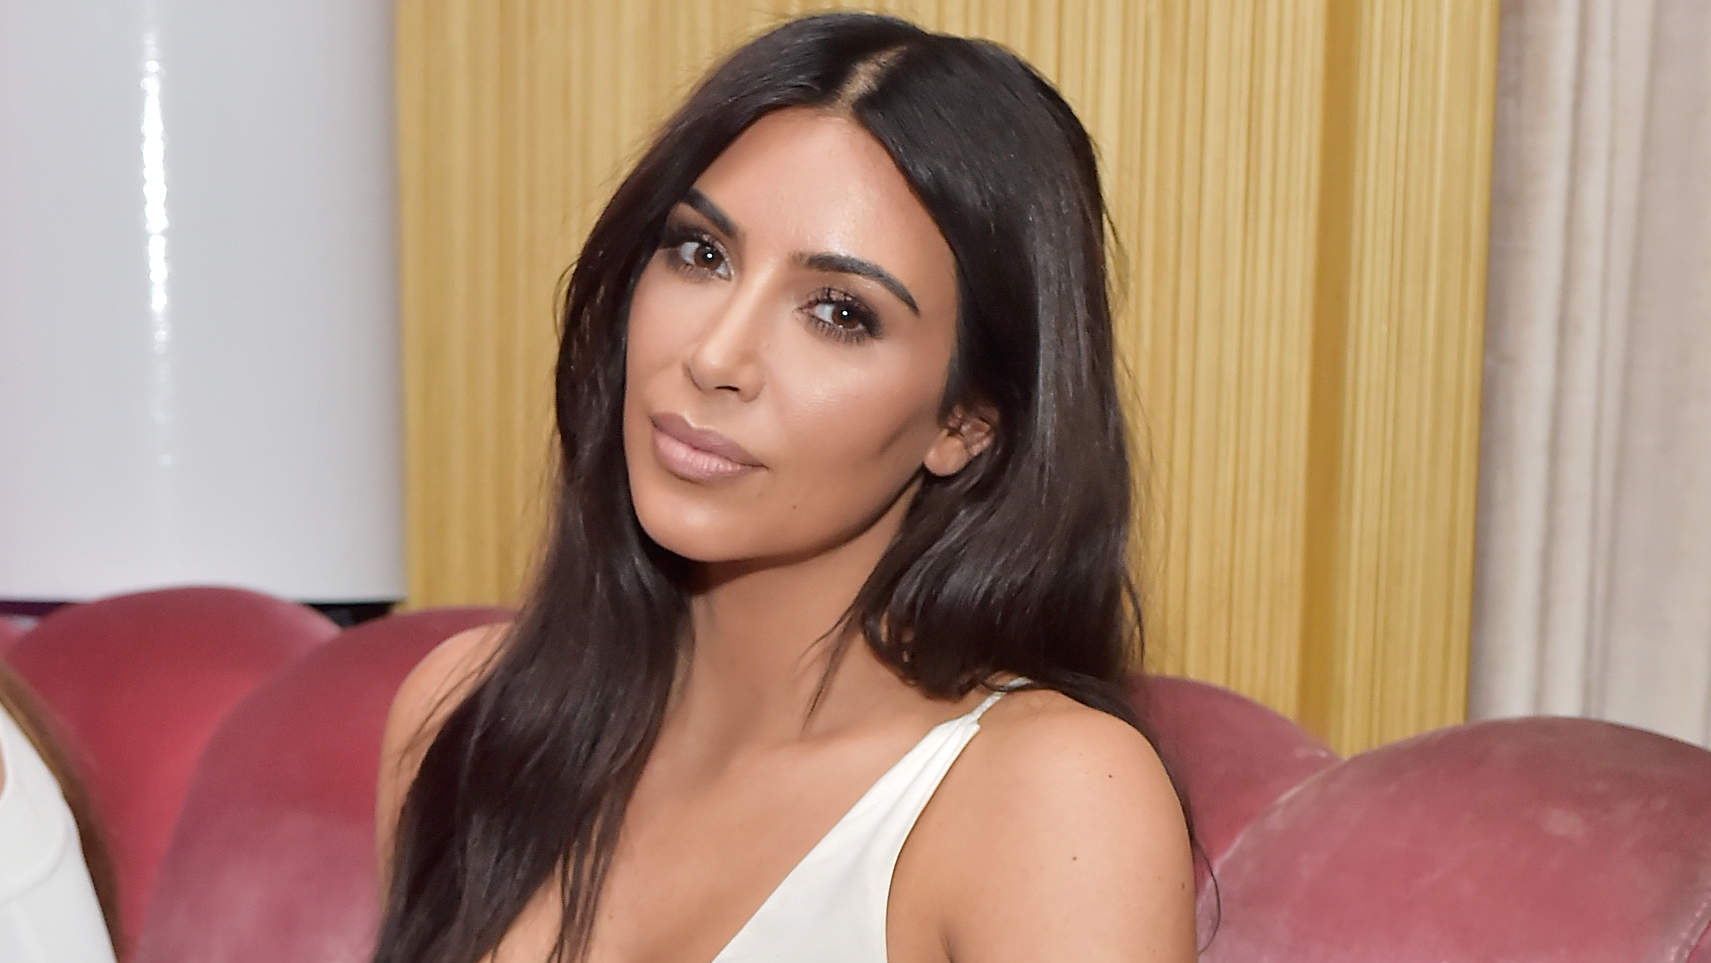 Kim Kardashian nue pour la promotion de son parfum : La bimbo ne cache plus rien !